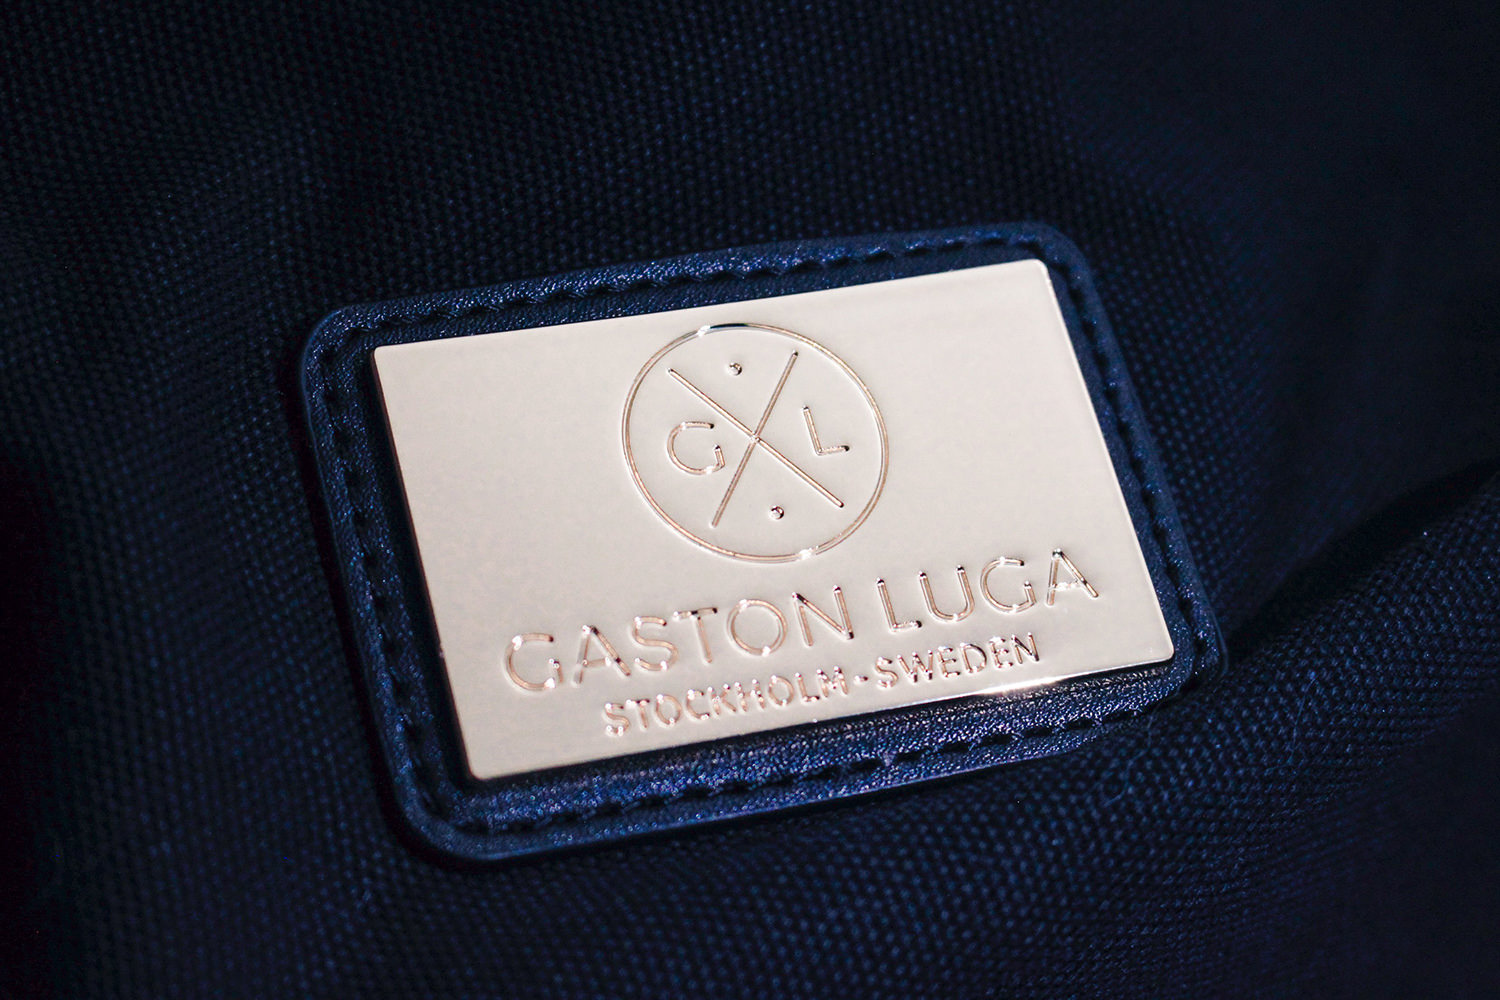 Gaston Luga 背包心得與評價4.jpg